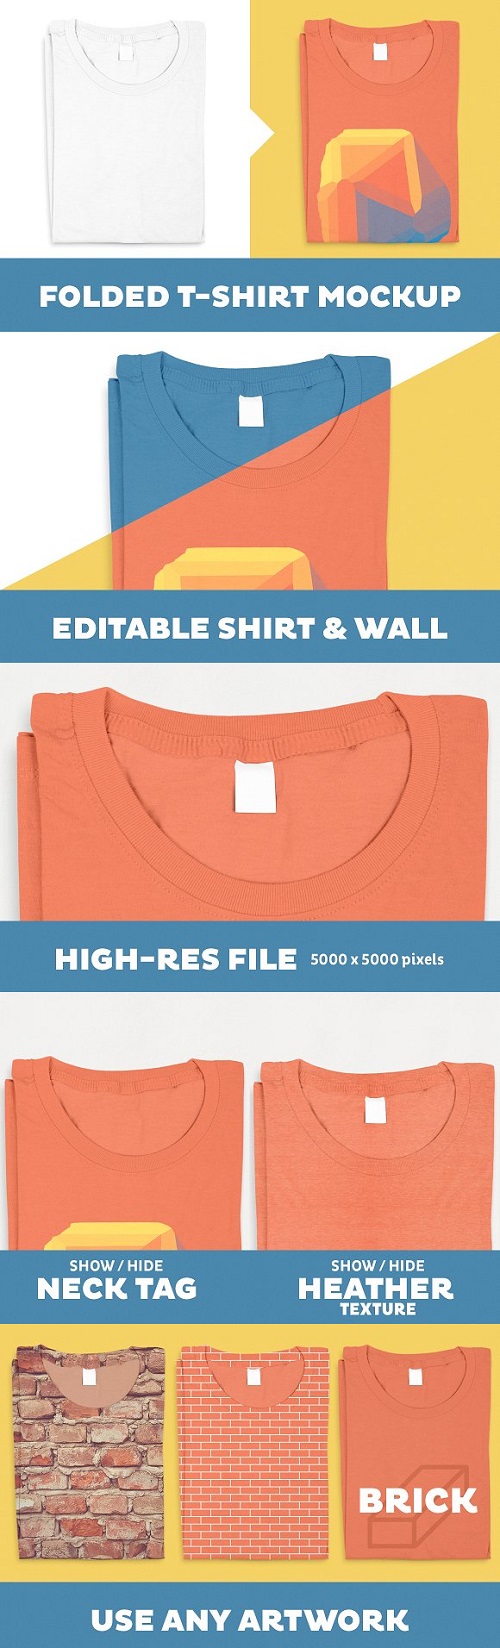 Folded T-Shirt Mockup Template - 233295